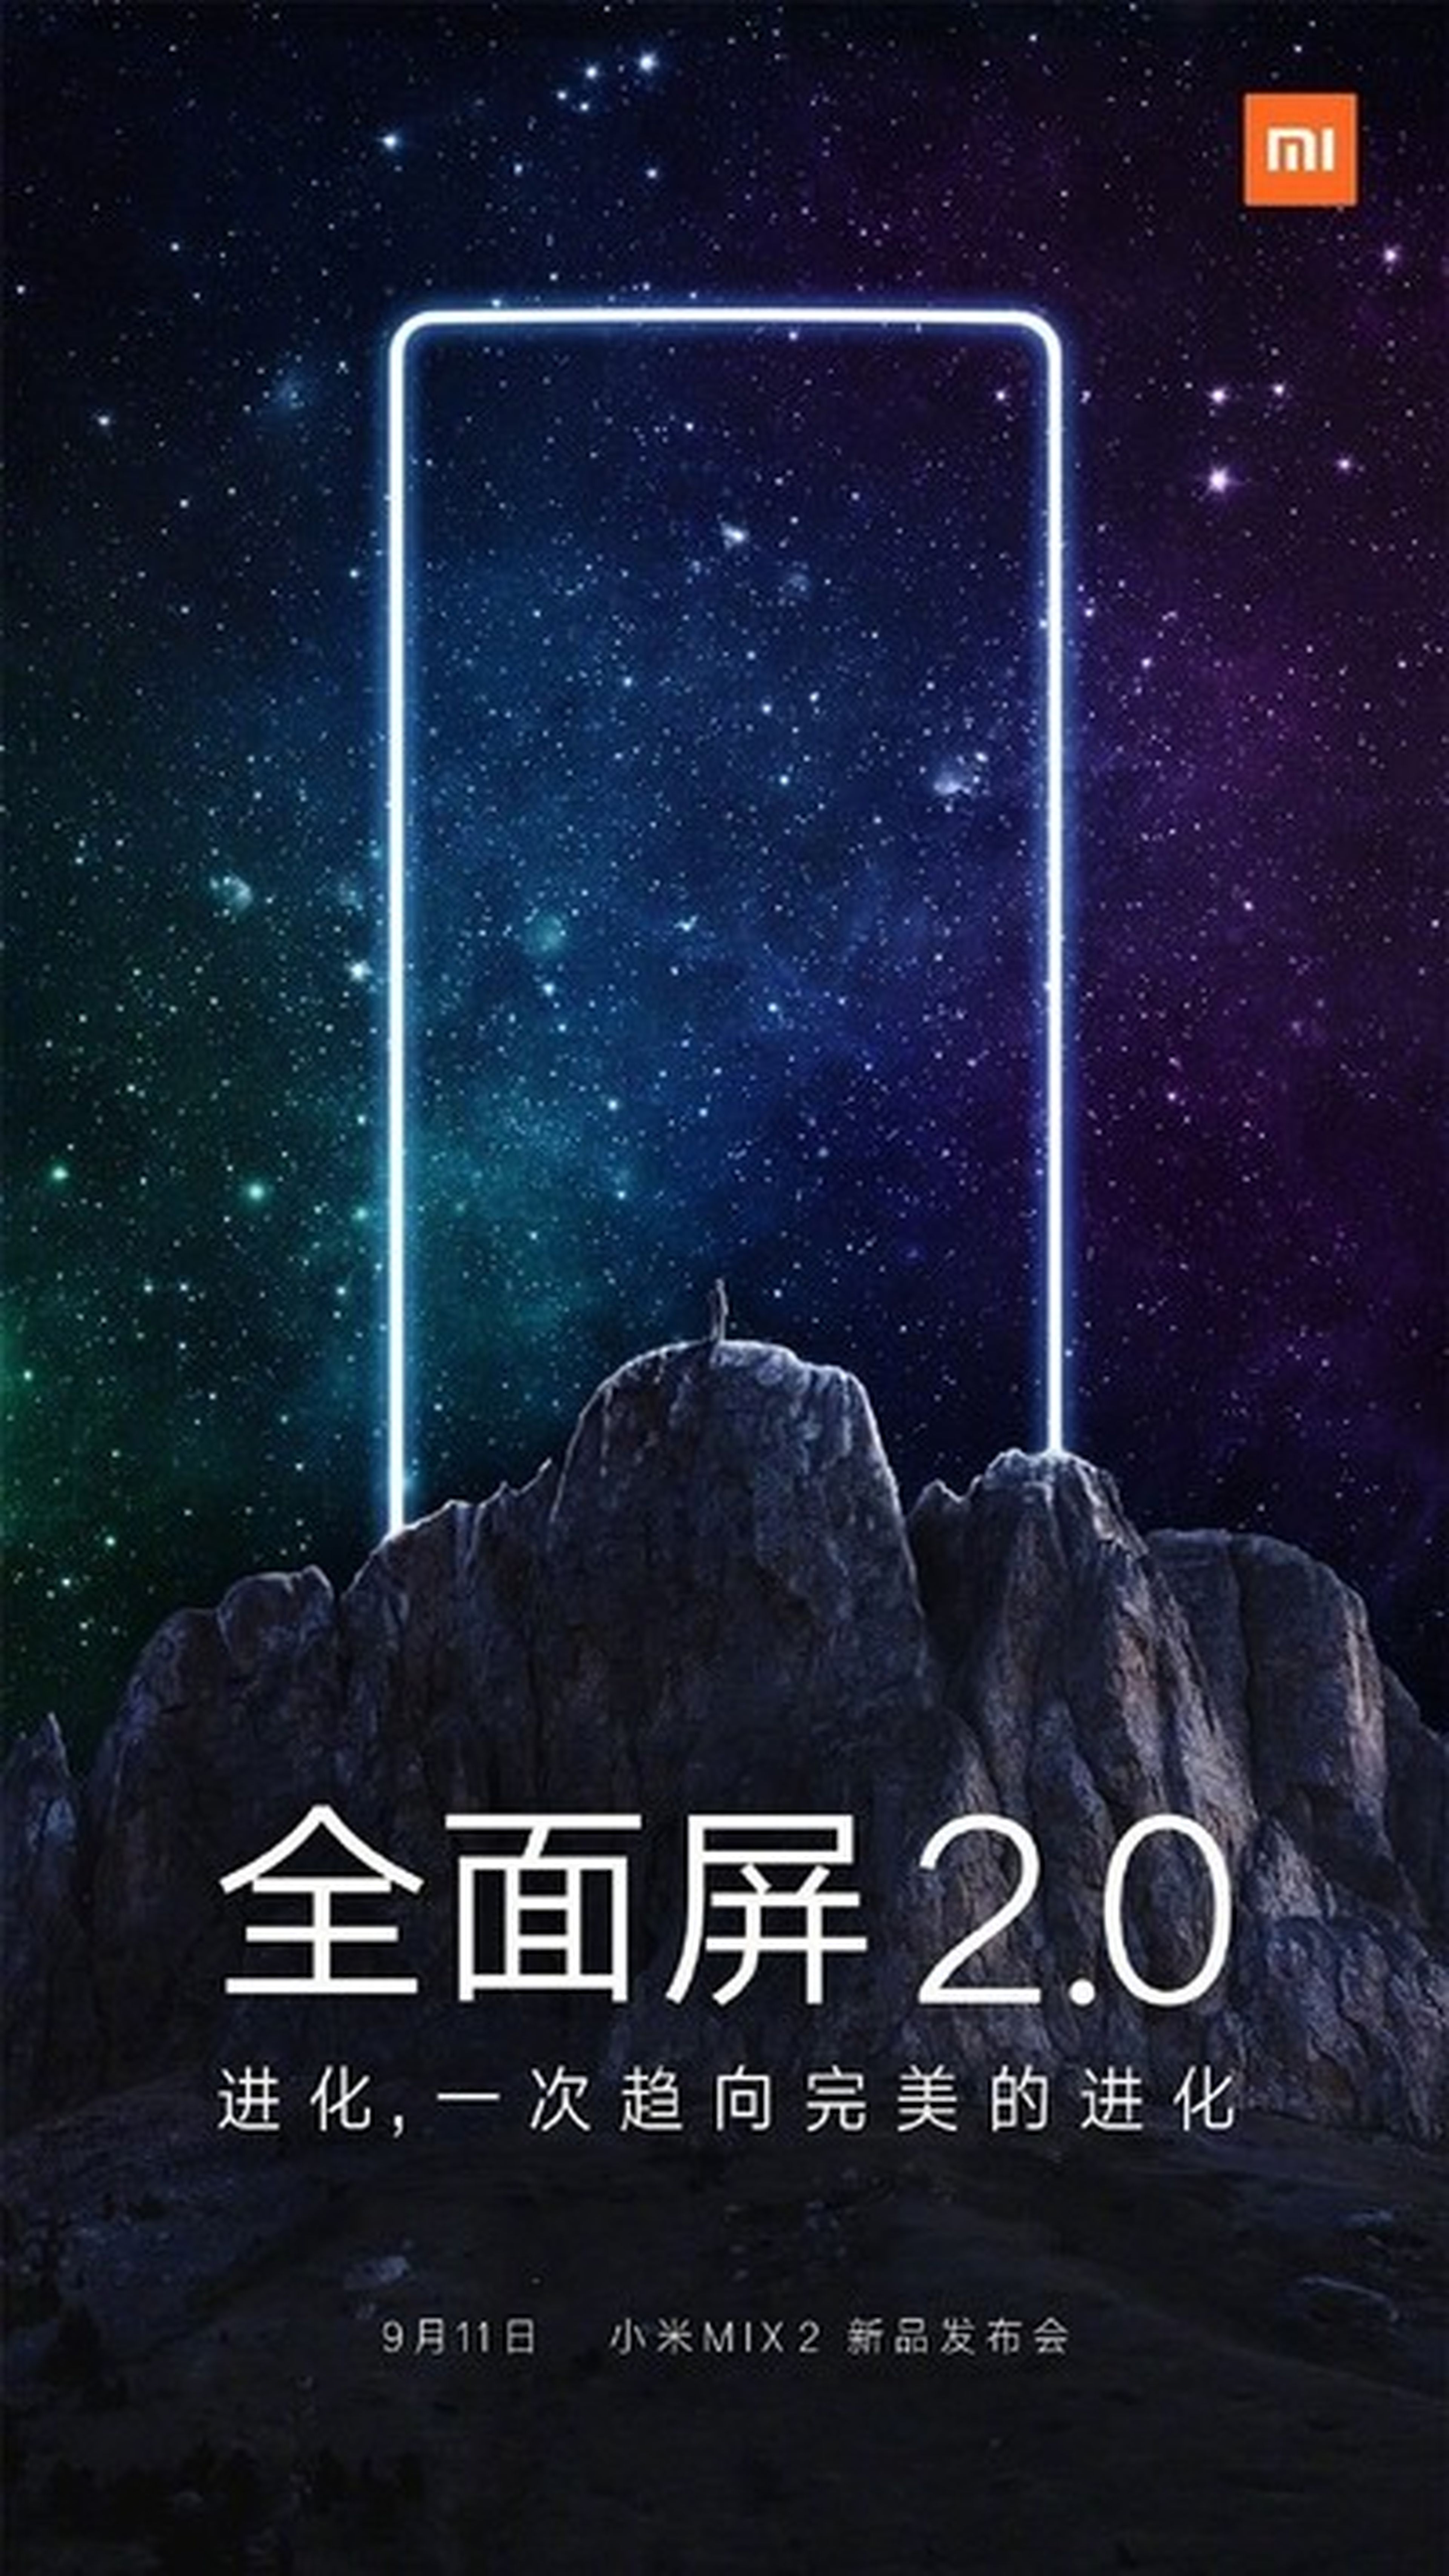 Confirmada la fecha de presentación del Xiaomi Mi Mix 2